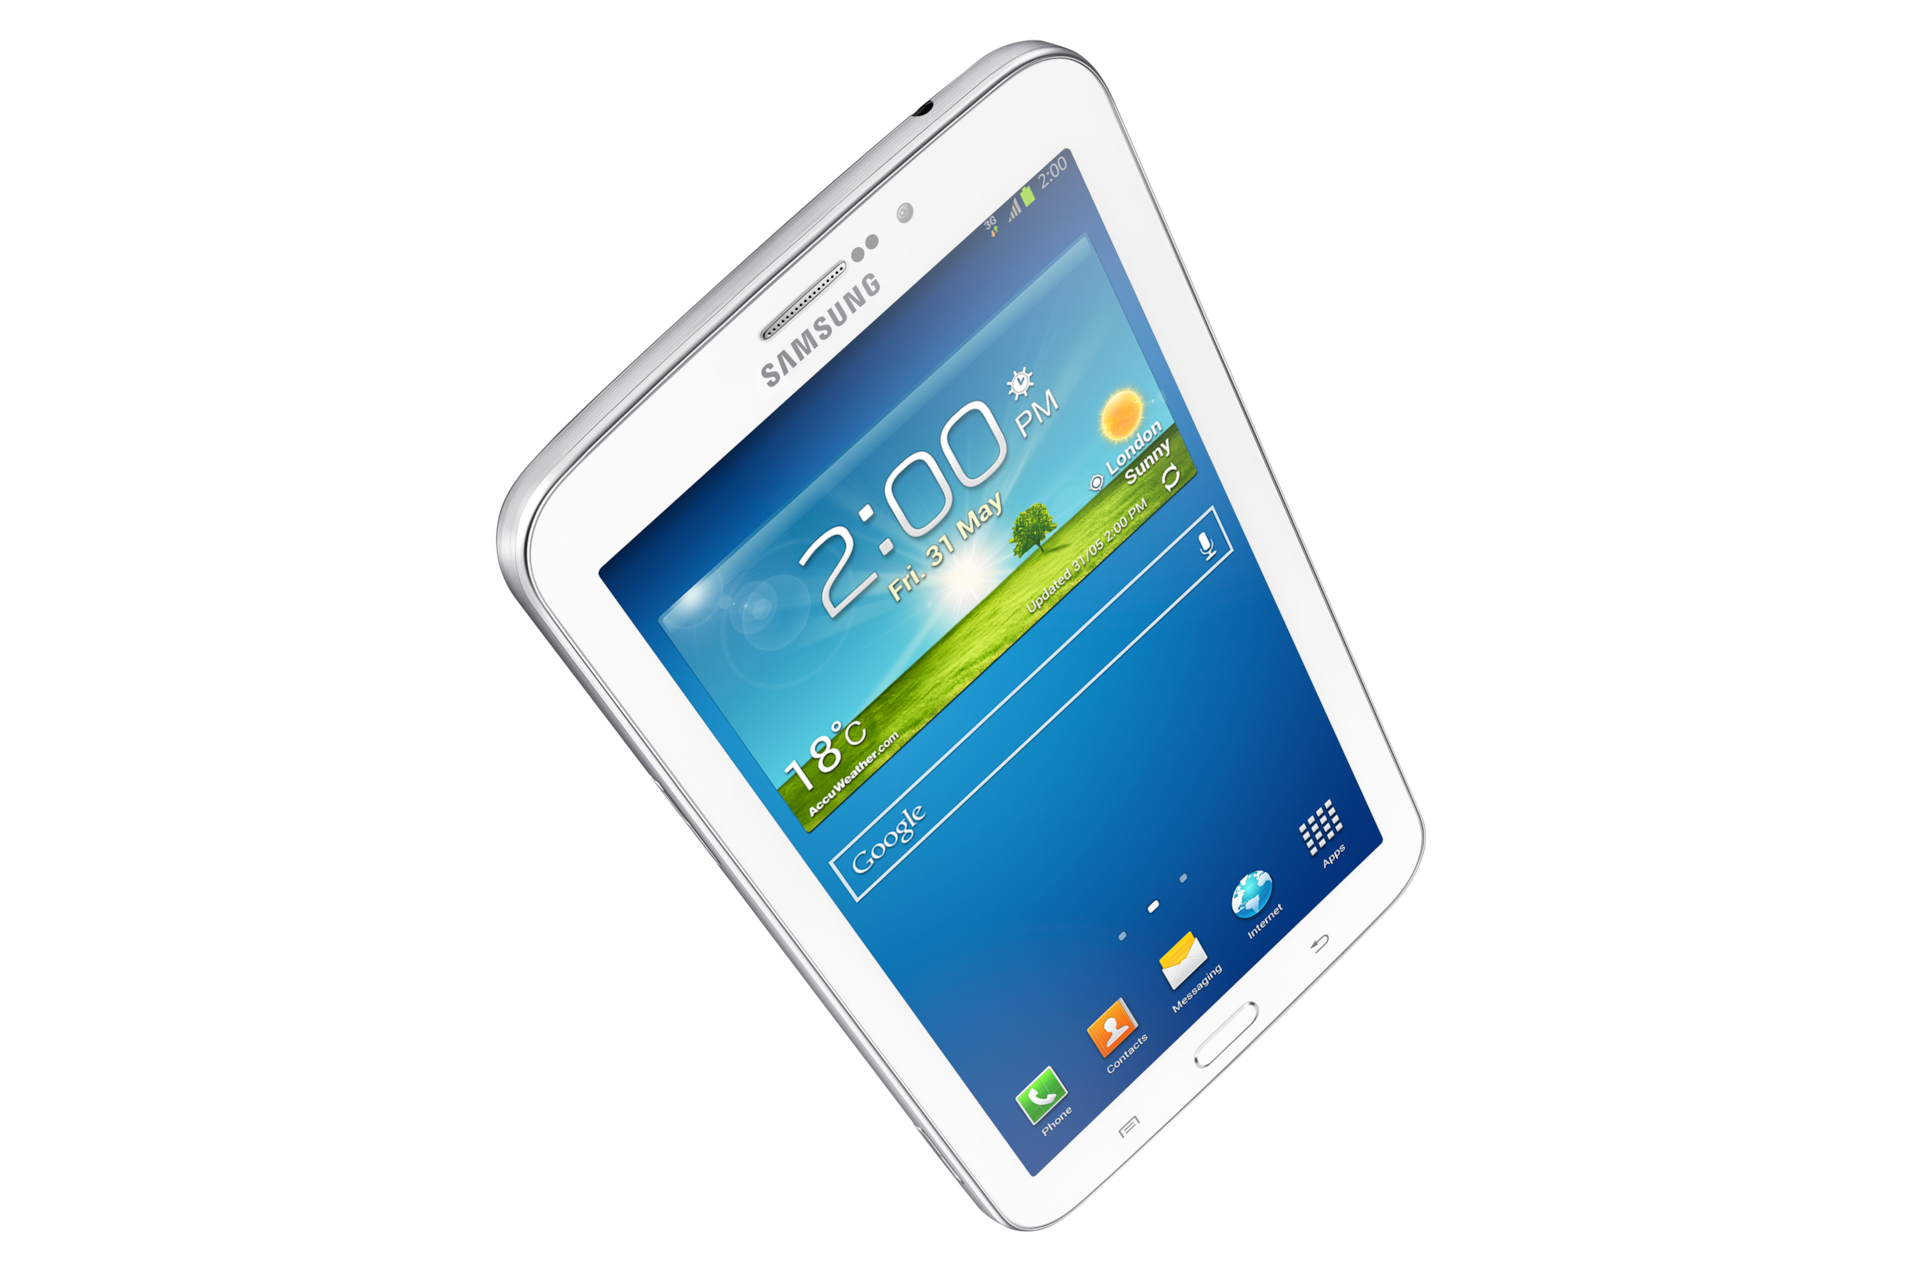 Samsung Galaxy Tab 3 7 0 T211 8gb Price In Pakistan Samsung In Pakistan At Symbios Pk